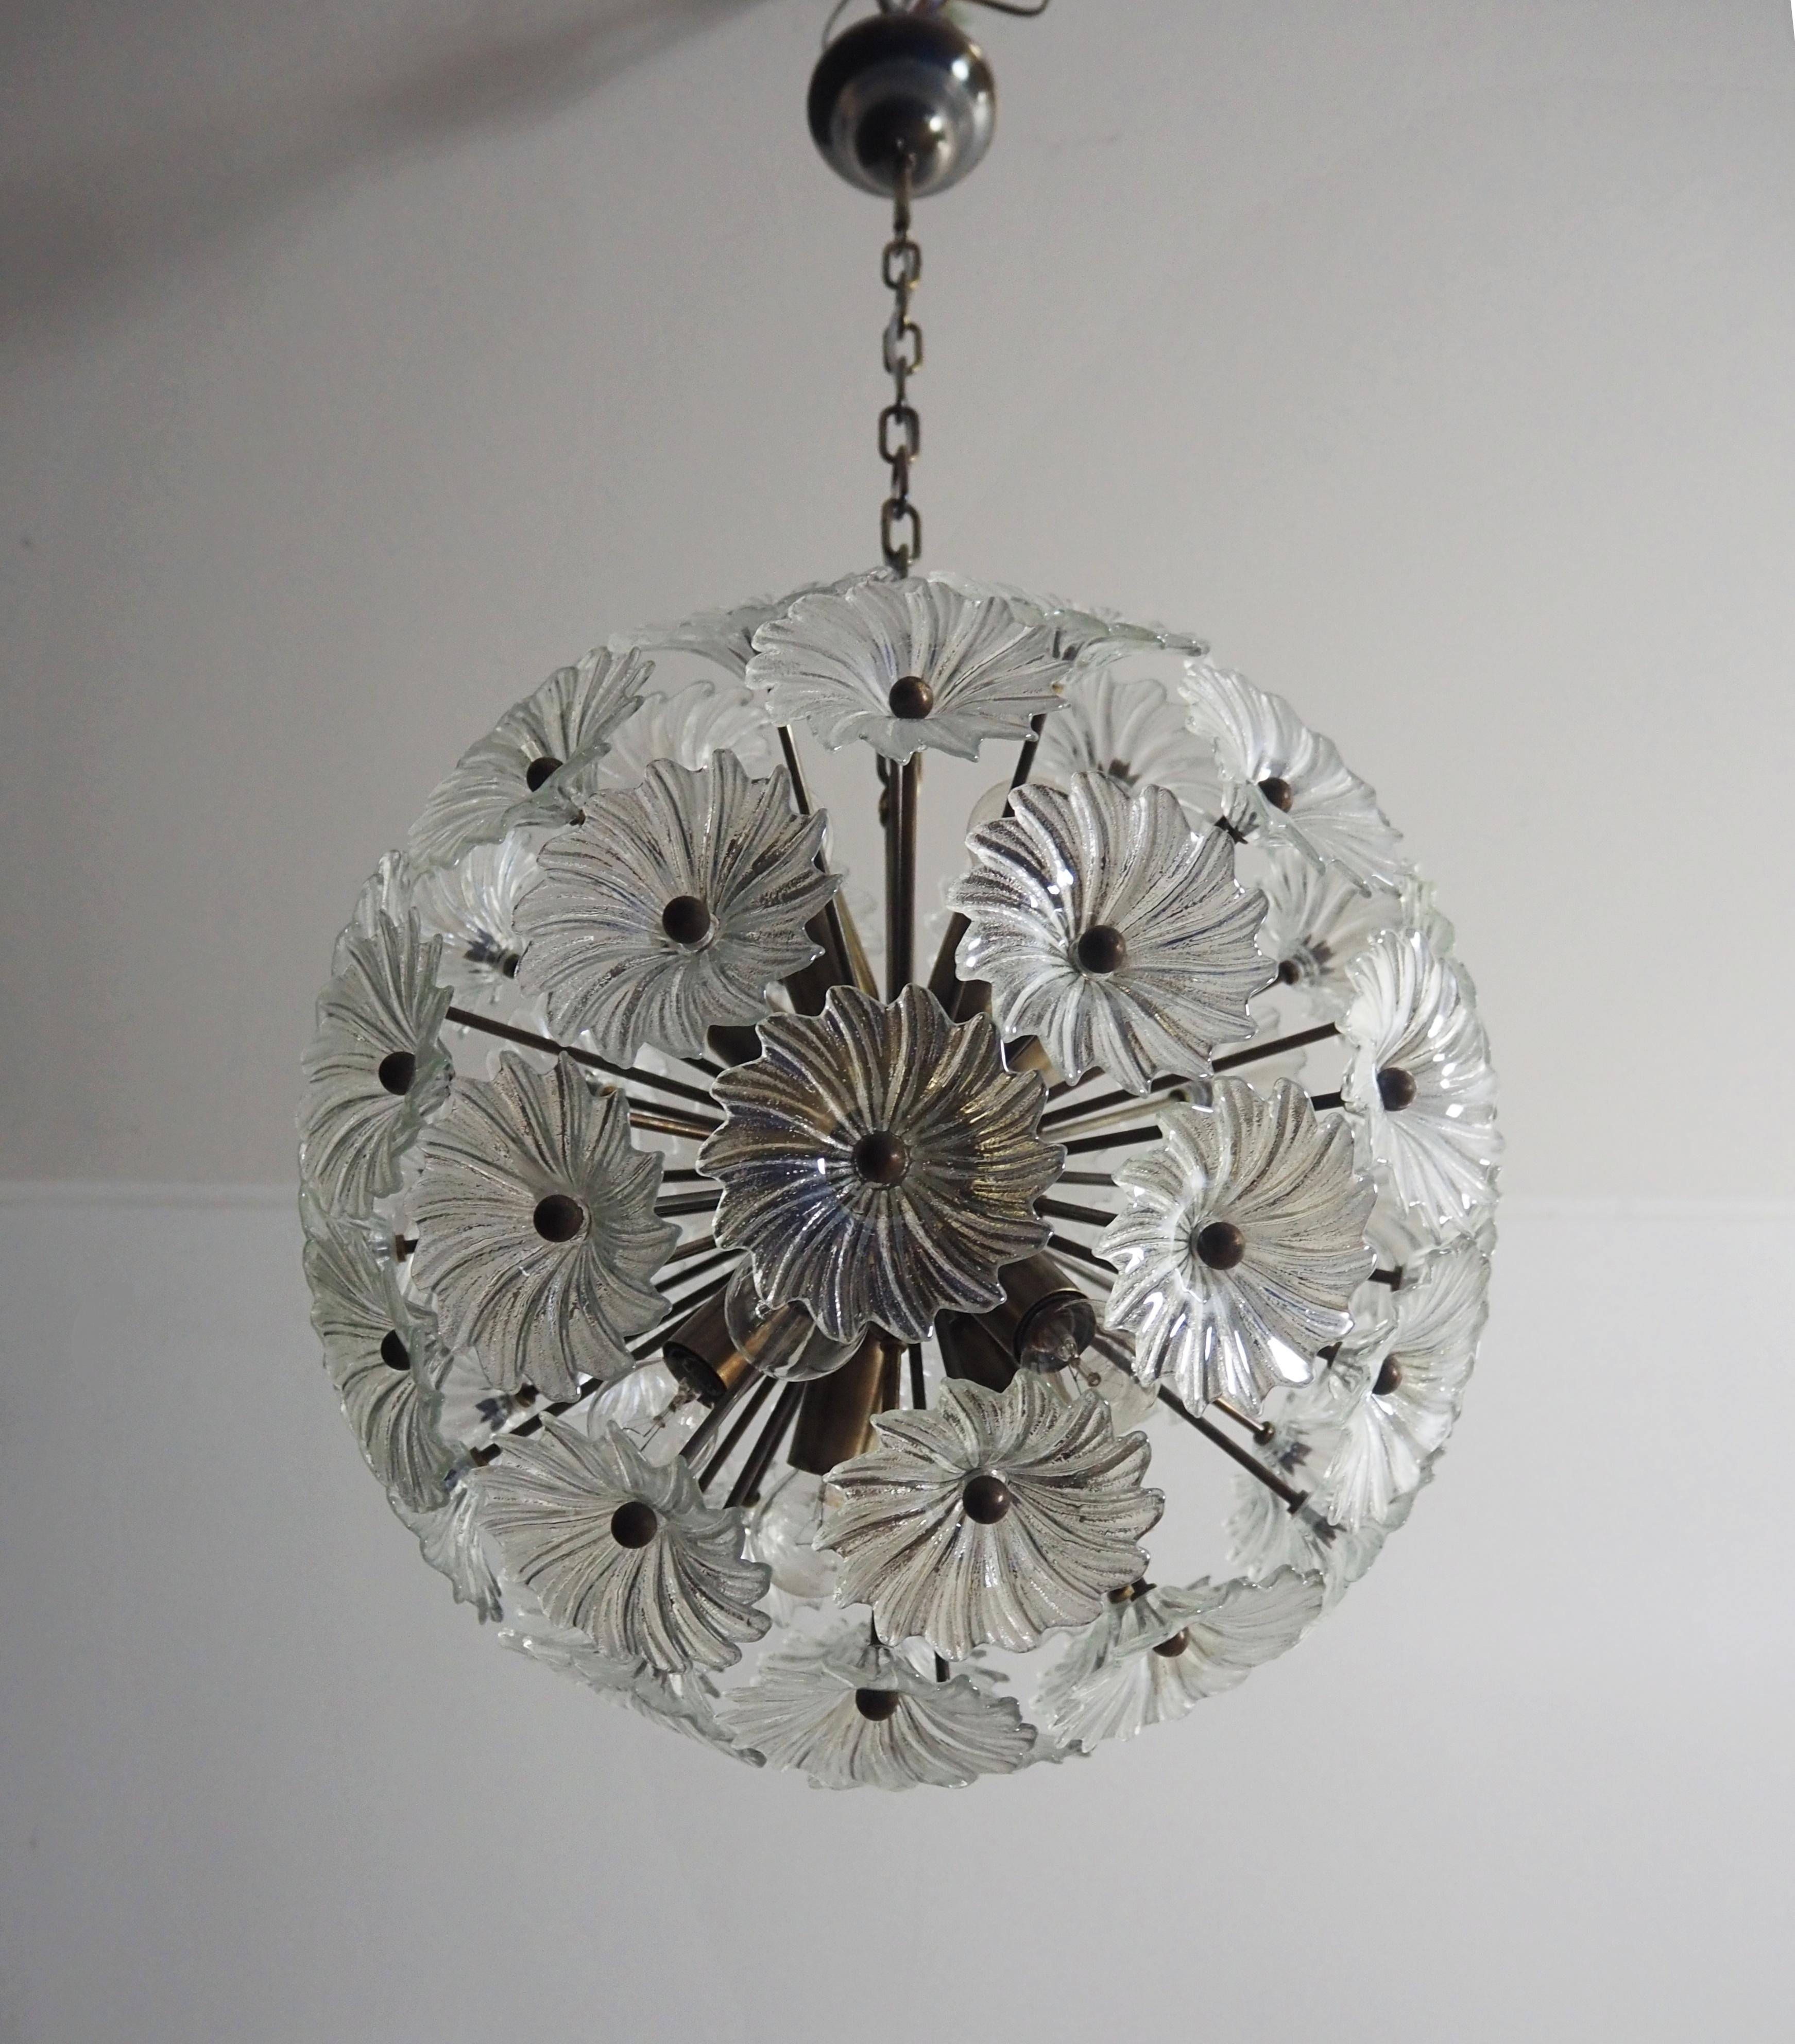 Vintage Sputnik Italian crystal chandelier - 51 Daisy clear glasses For Sale 2